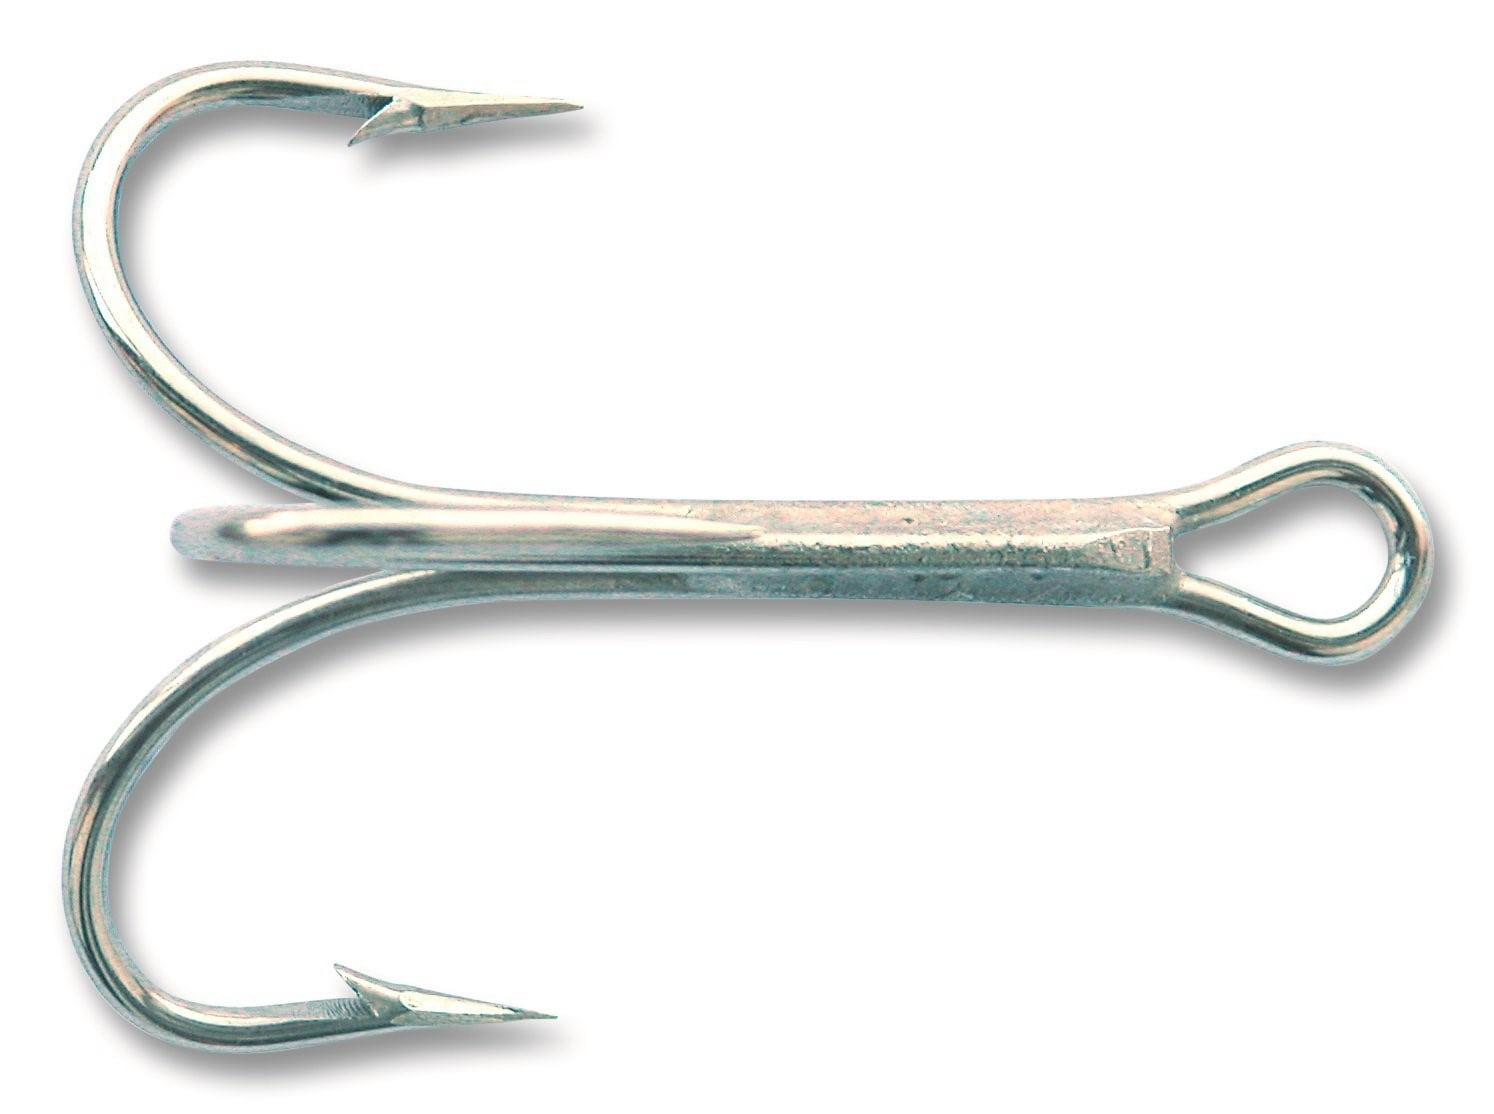 Mustad Catfish Hook Kit 35 Piece High Carbon Steel Fishing Hooks